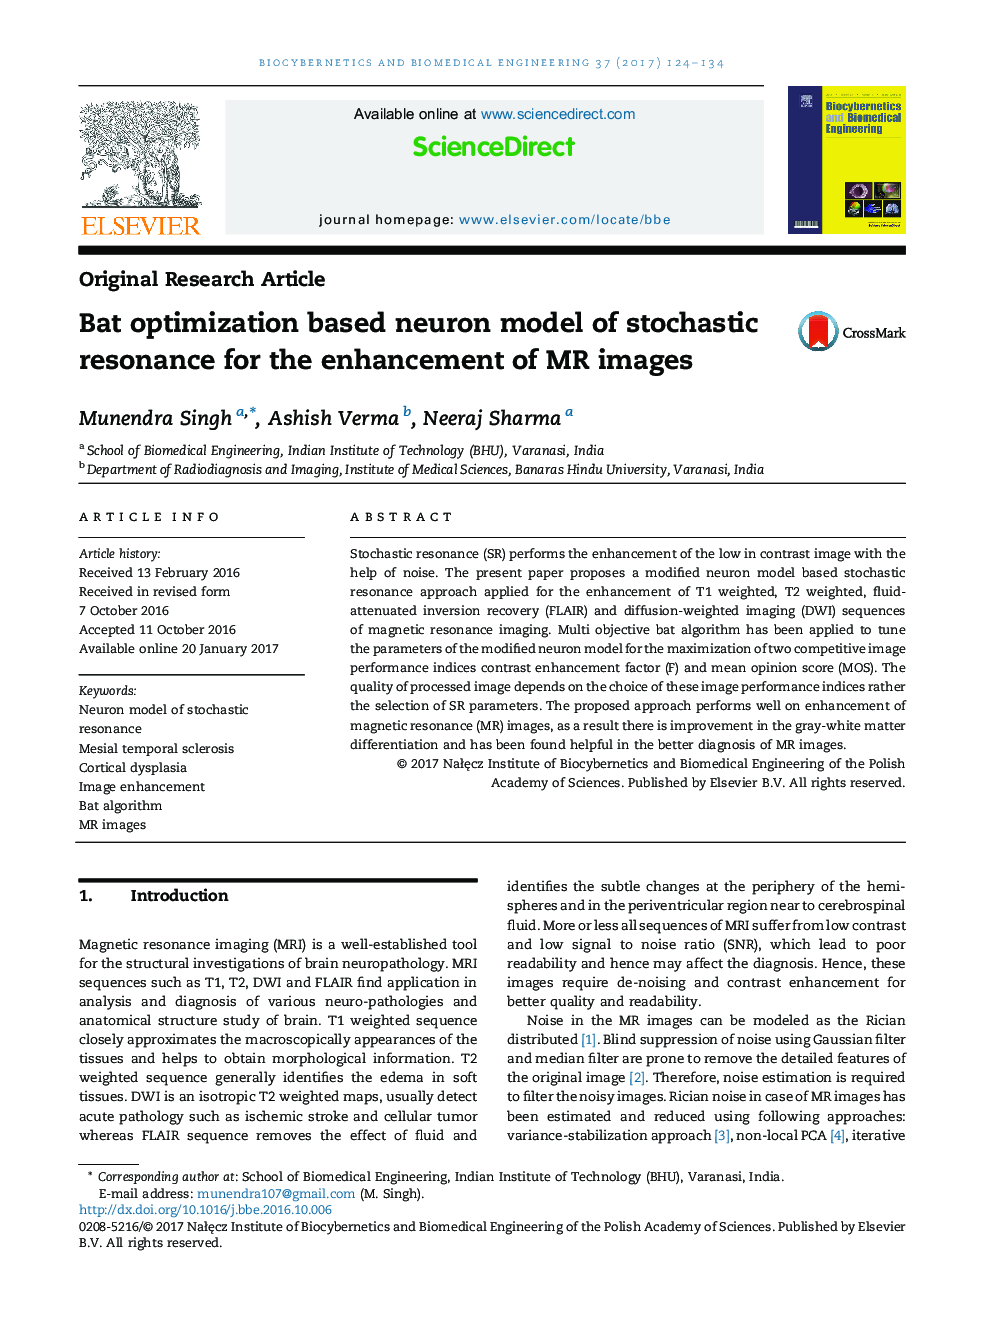 Bat optimization based neuron model of stochastic resonance for the enhancement of MR images